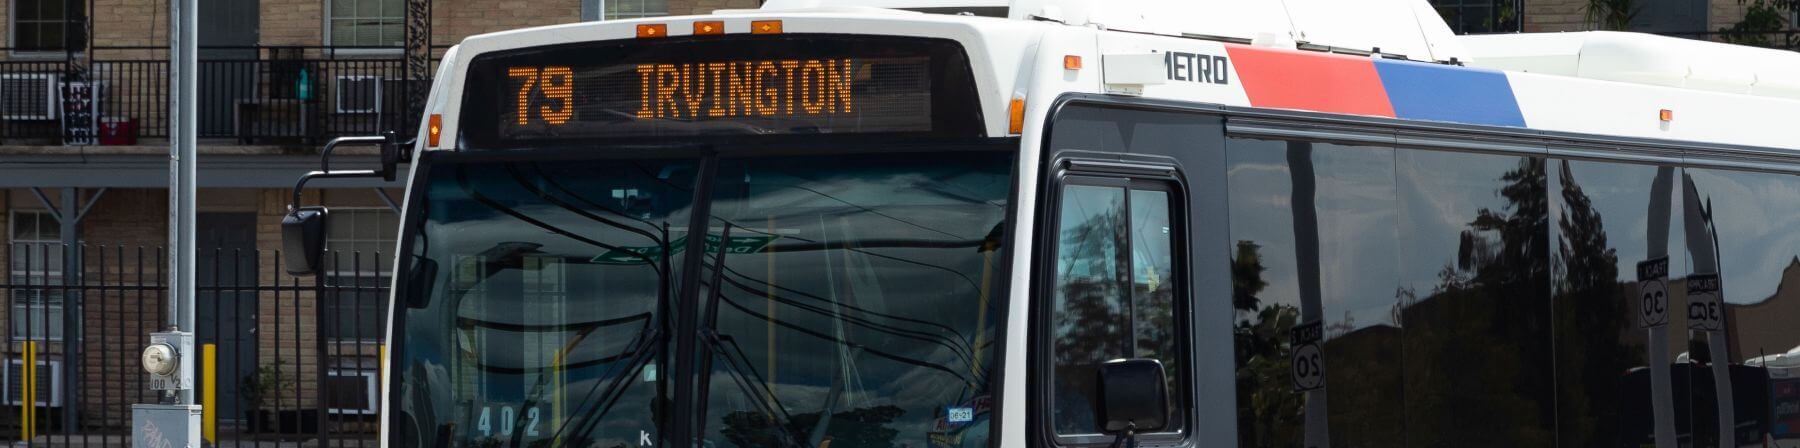 79 Irvington bus